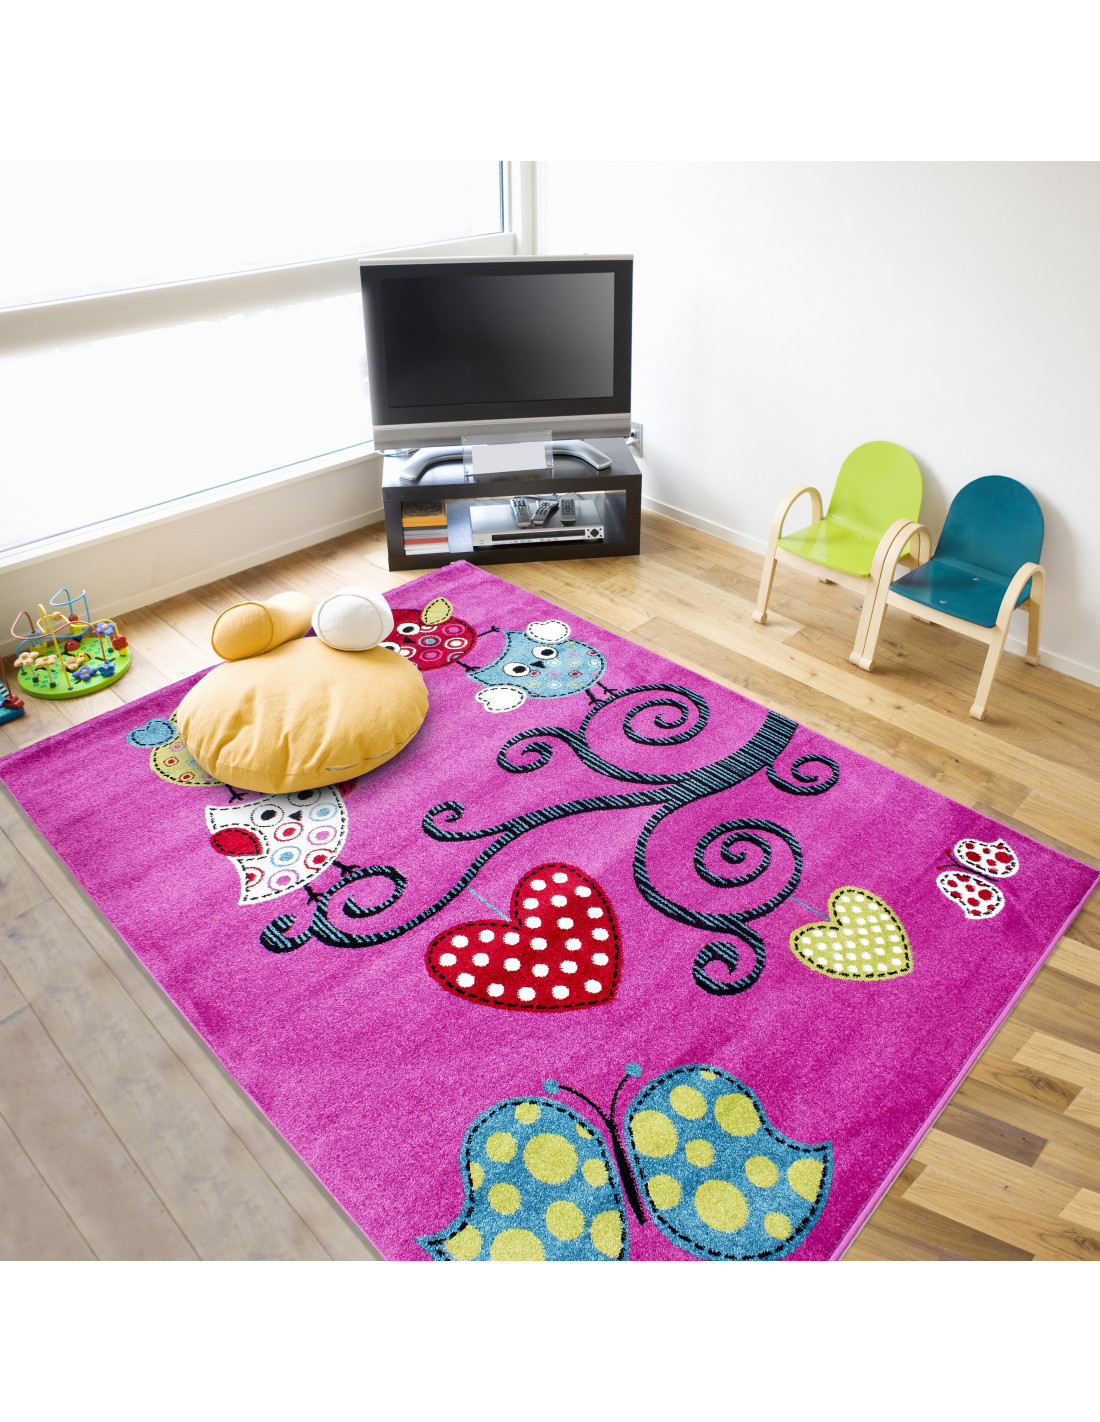 Children's carpet, children's room carpet with motifs tree butterfly kids 0420 purple